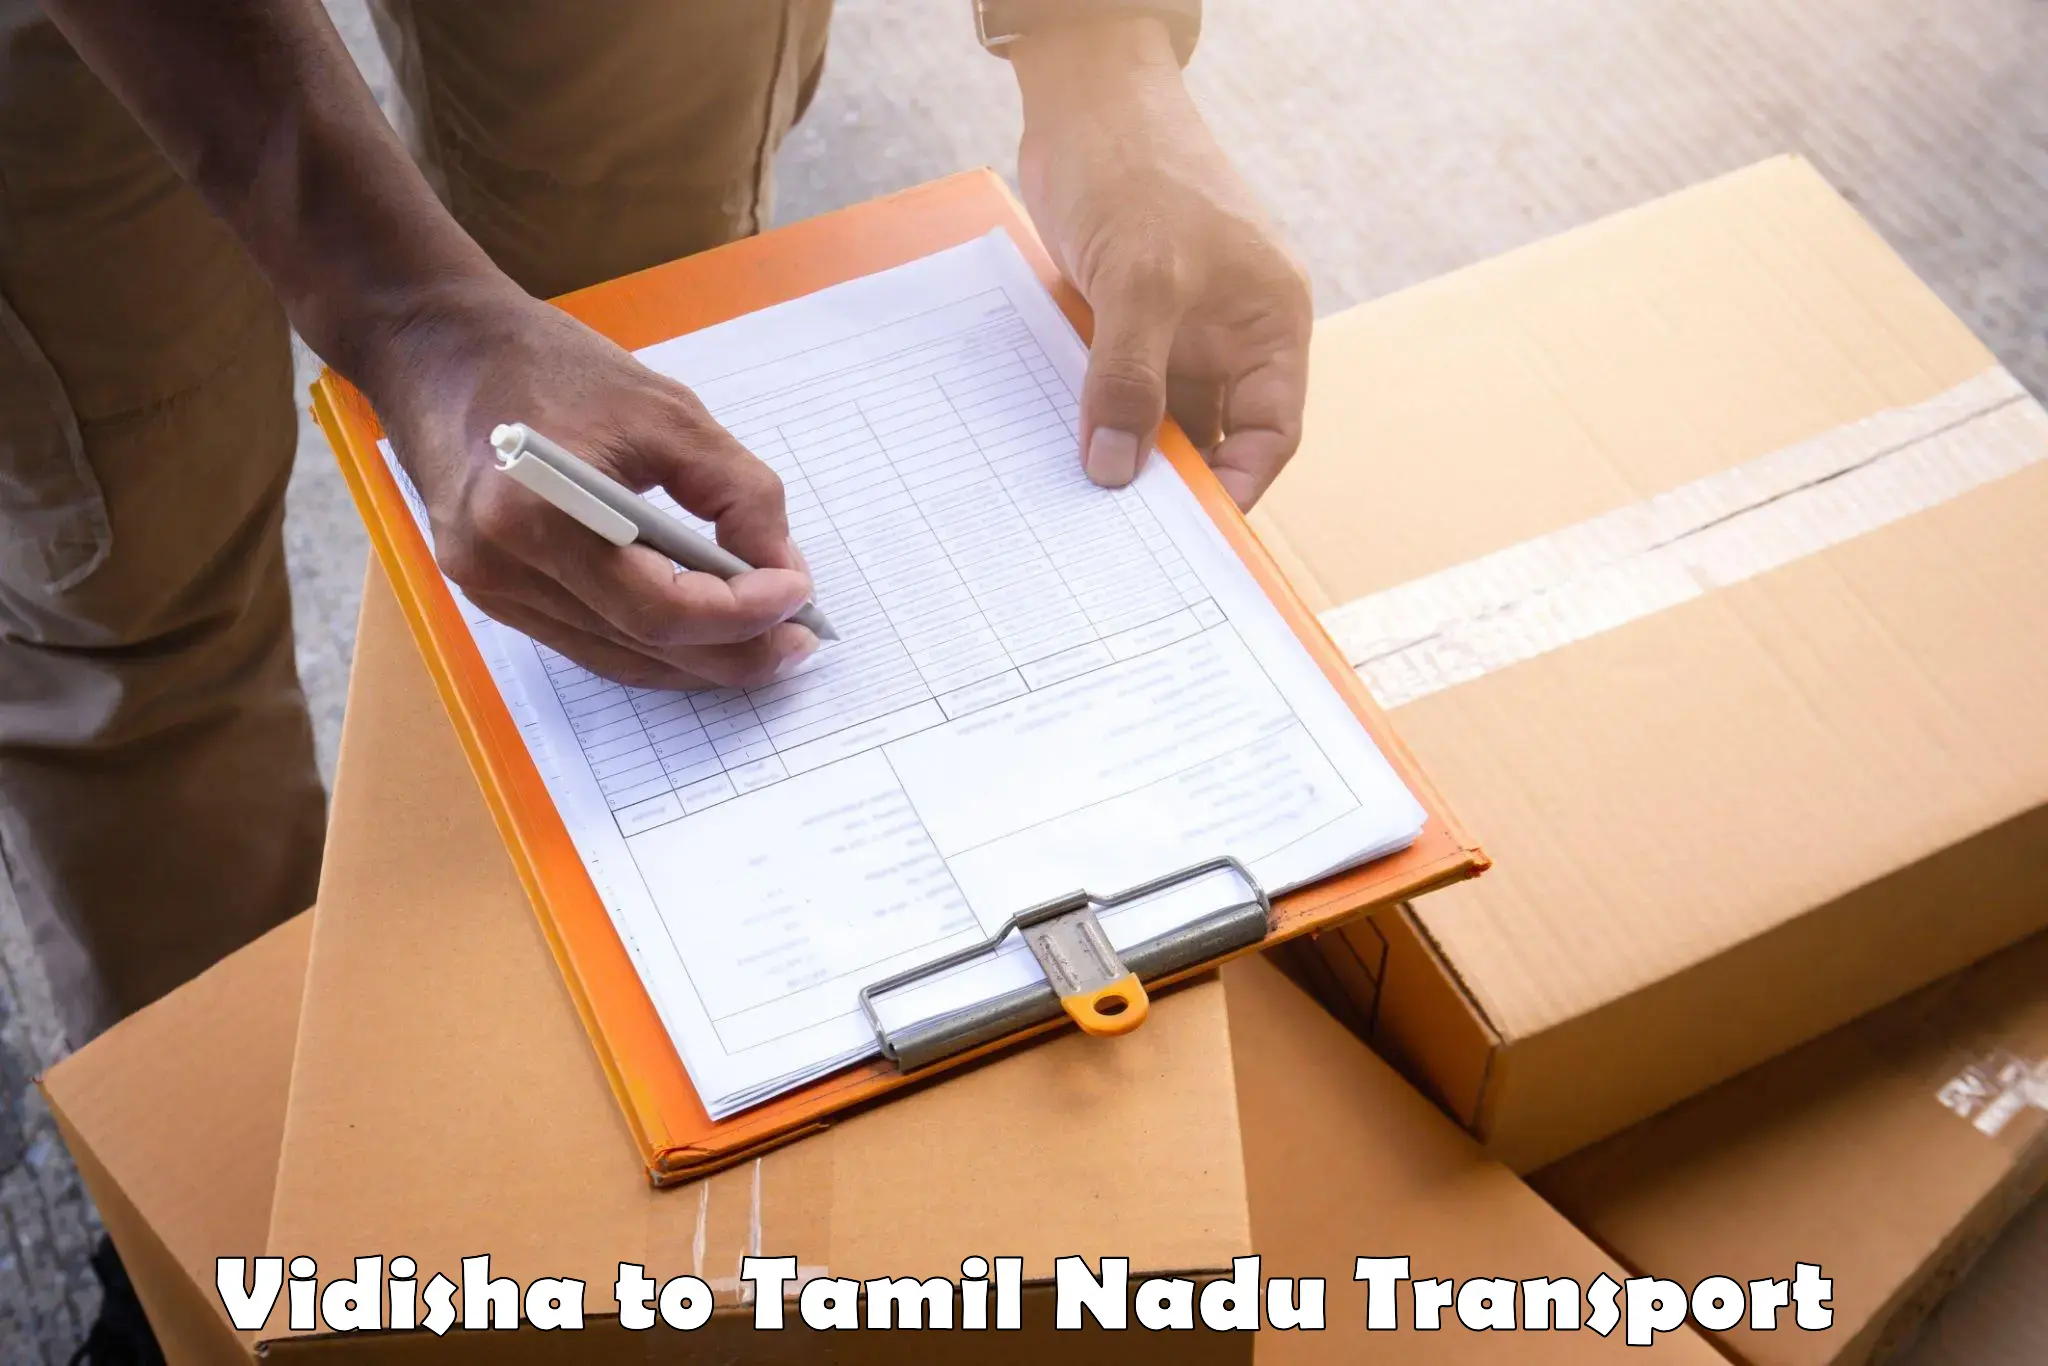 Delivery service Vidisha to Sriperumbudur